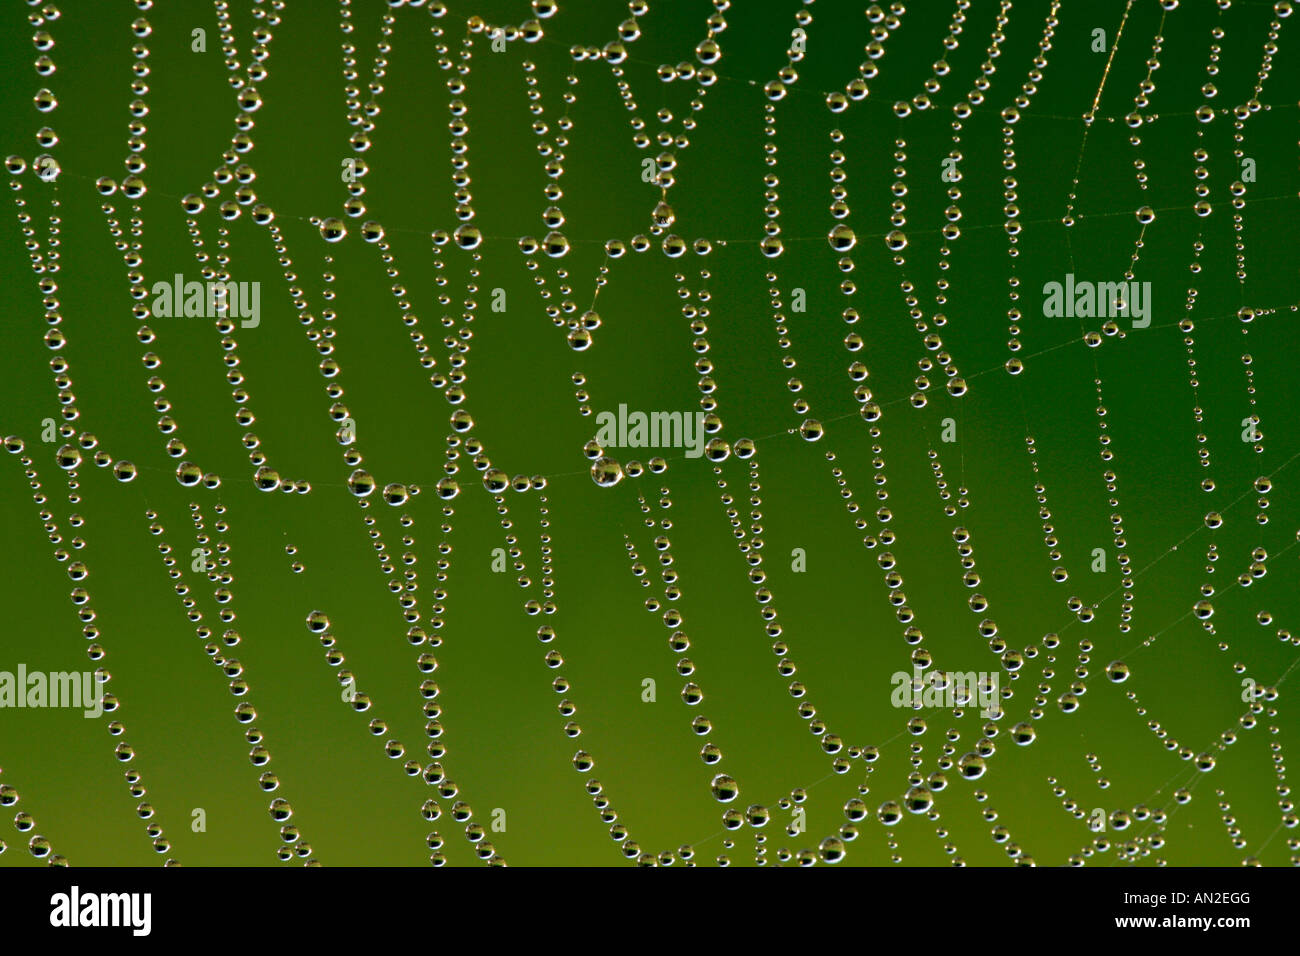 Spinnennetz mit Tautropfen Baden Wuerttemberg Deutschland cobweb with droplets of morning dew Baden Wuerttemberg Germany Stock Photo